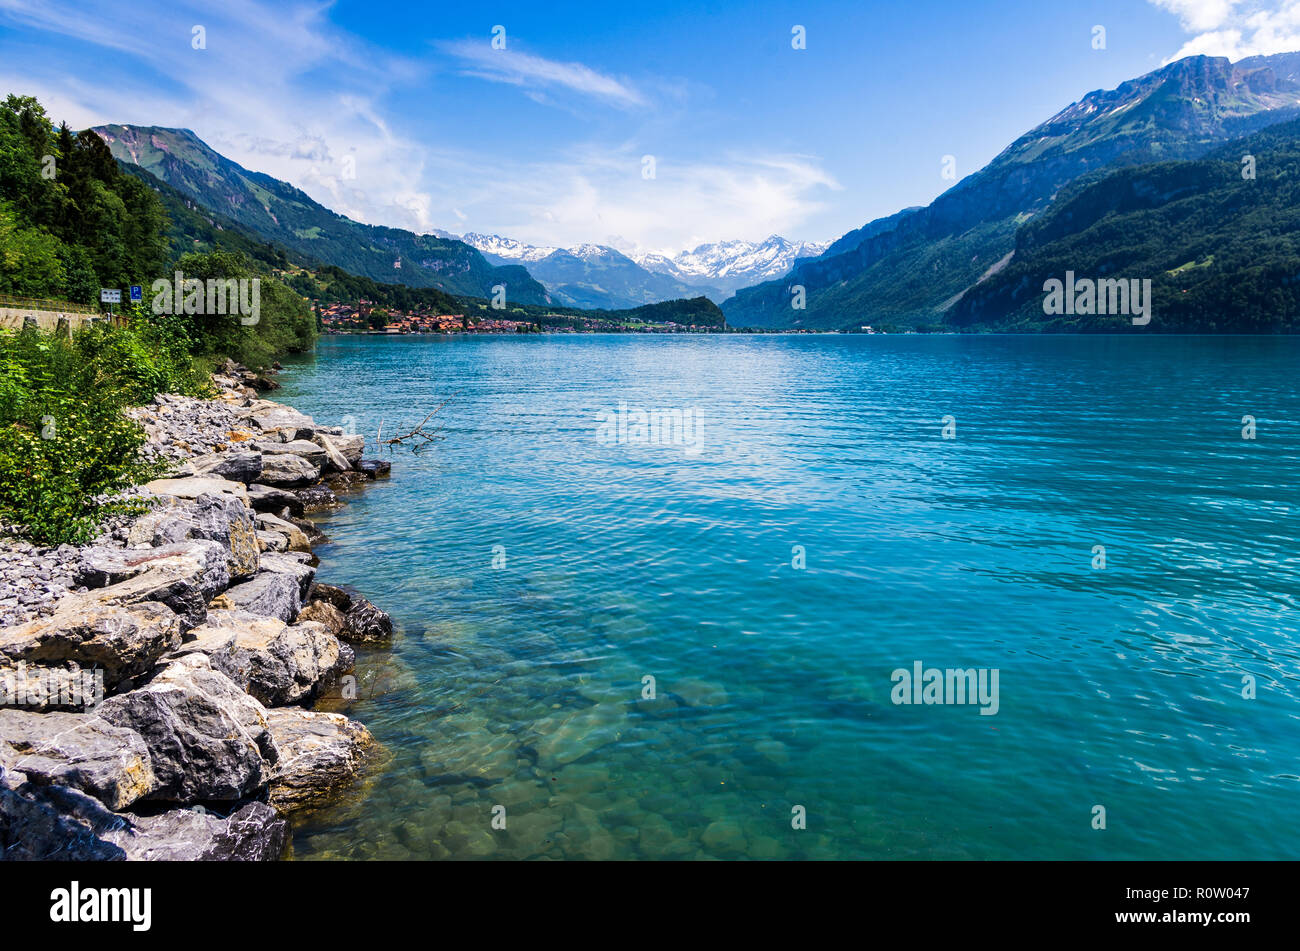 Lake side  mountain landscape, emerald water, summer, blue sky Stock Photo